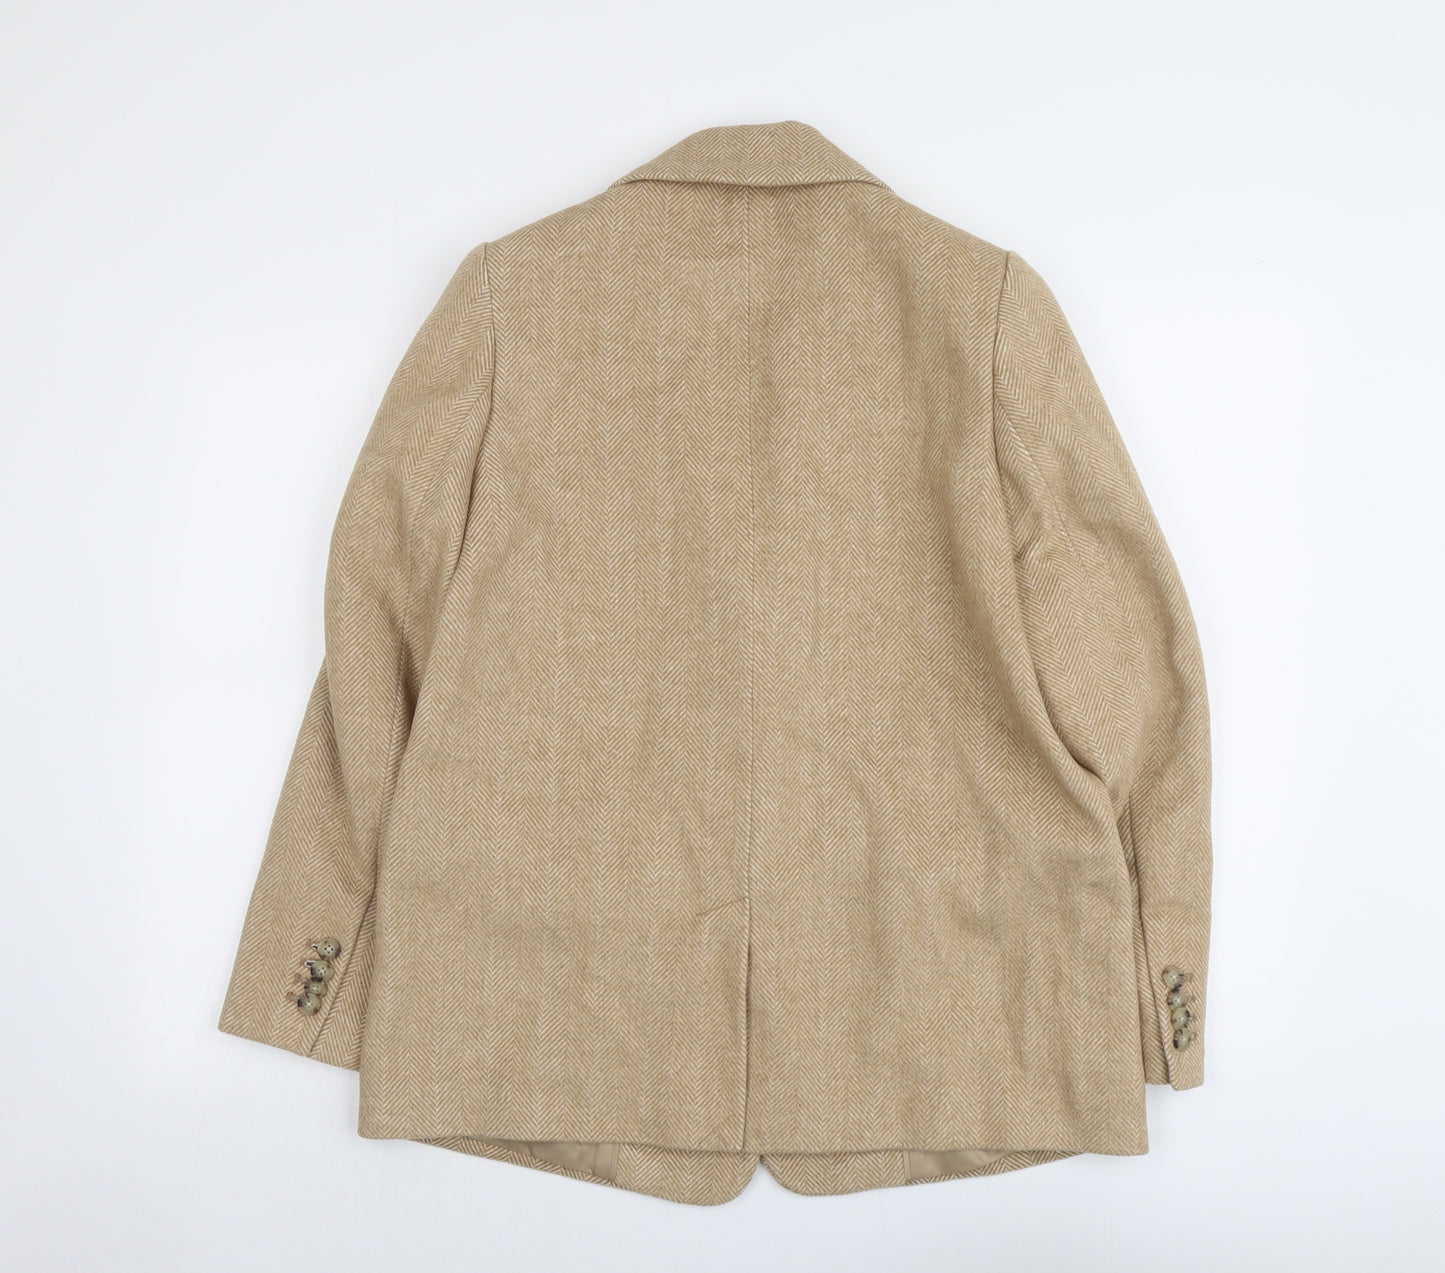 Marks and Spencer Womens Beige Geometric Jacket Blazer Size 12 Button